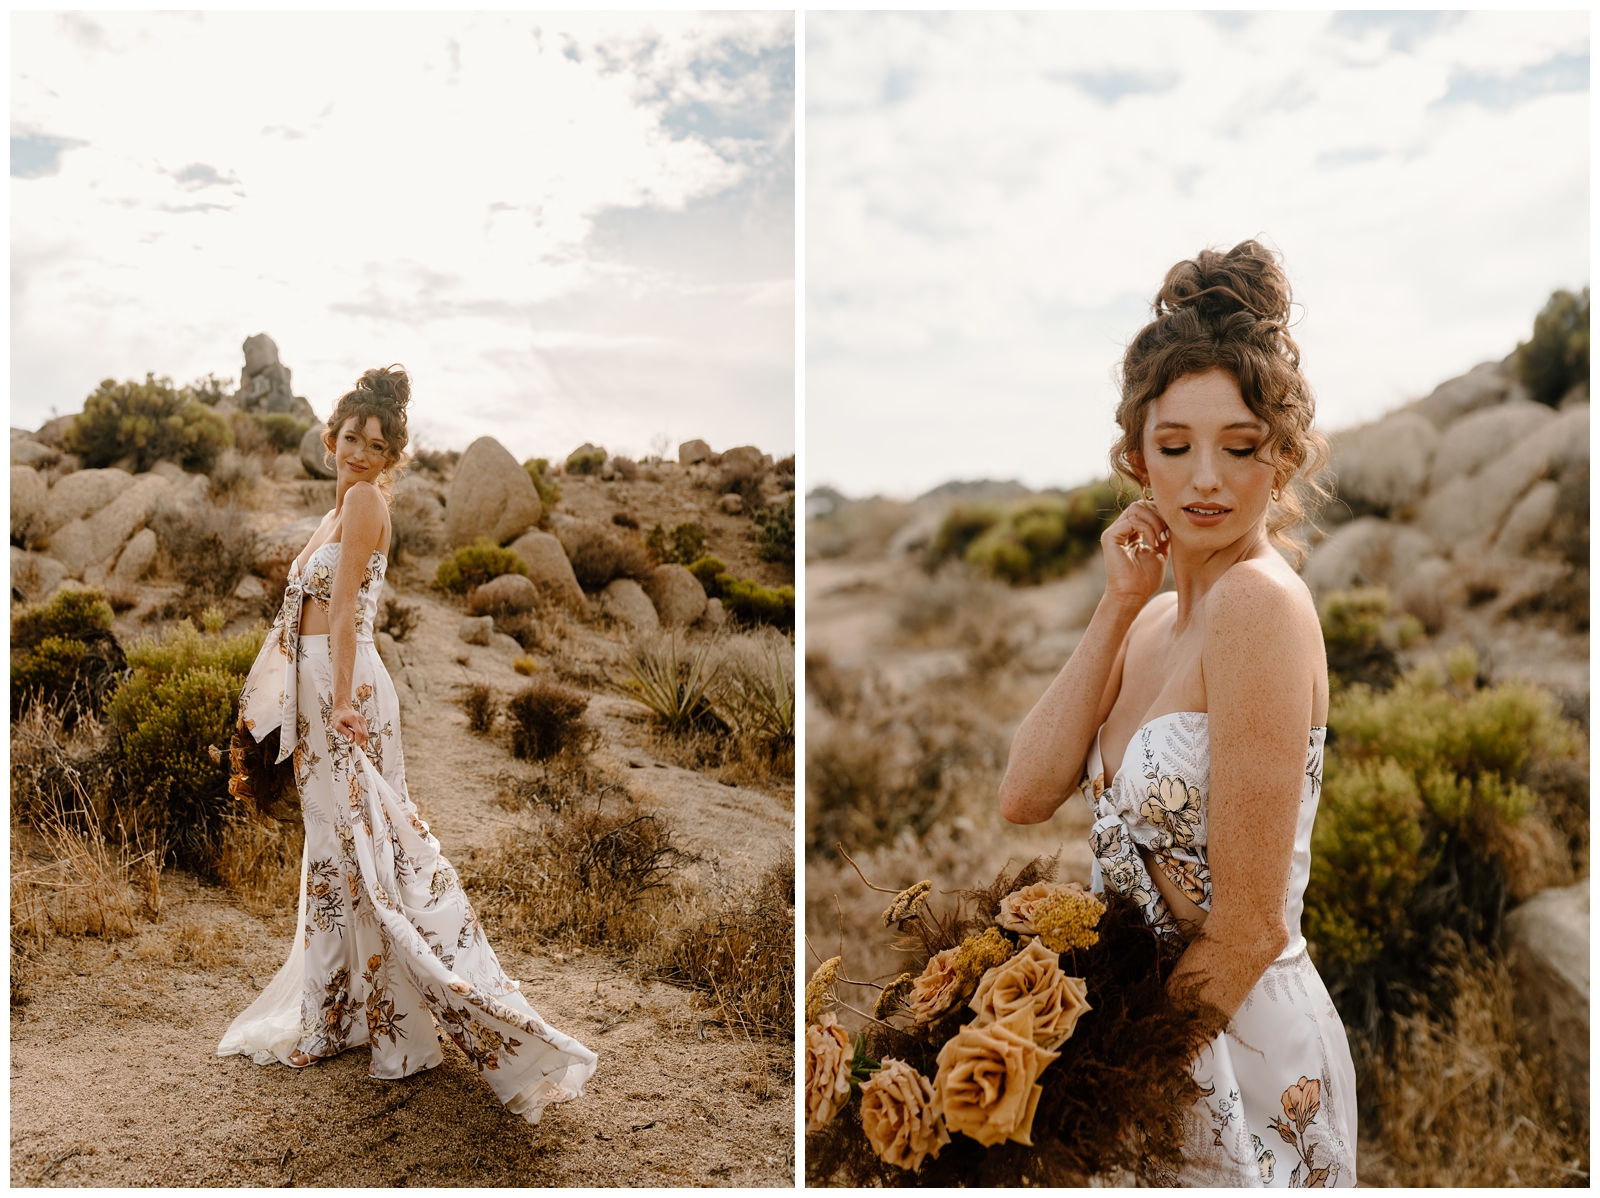 Chic desert bride in Joshua Tree, California by travel elopement photographer Kayli LaFon